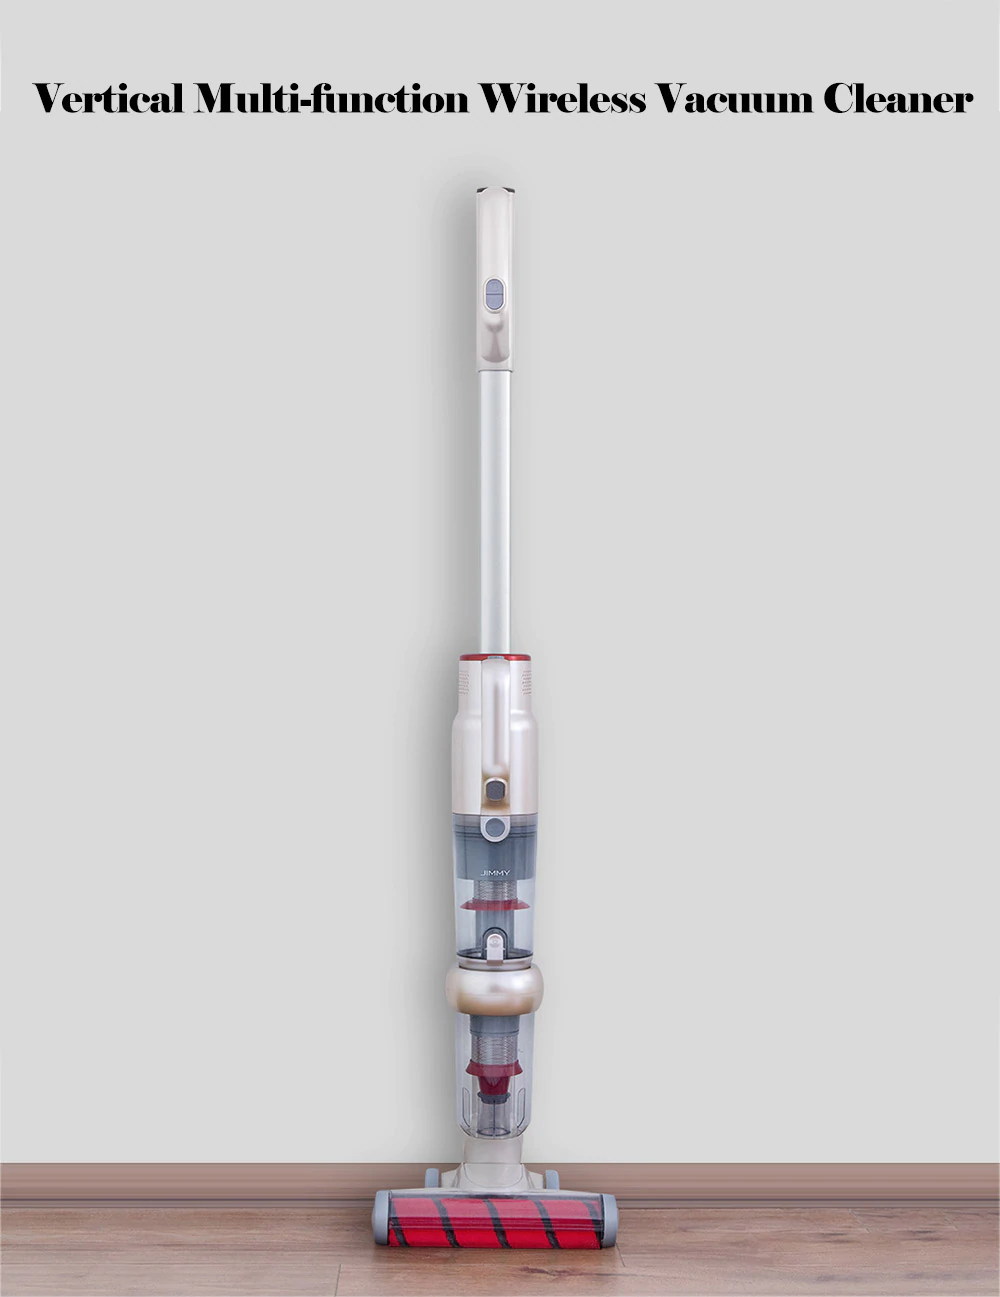 lexy jimmy jv71 vertical wireless vacuum cleaner